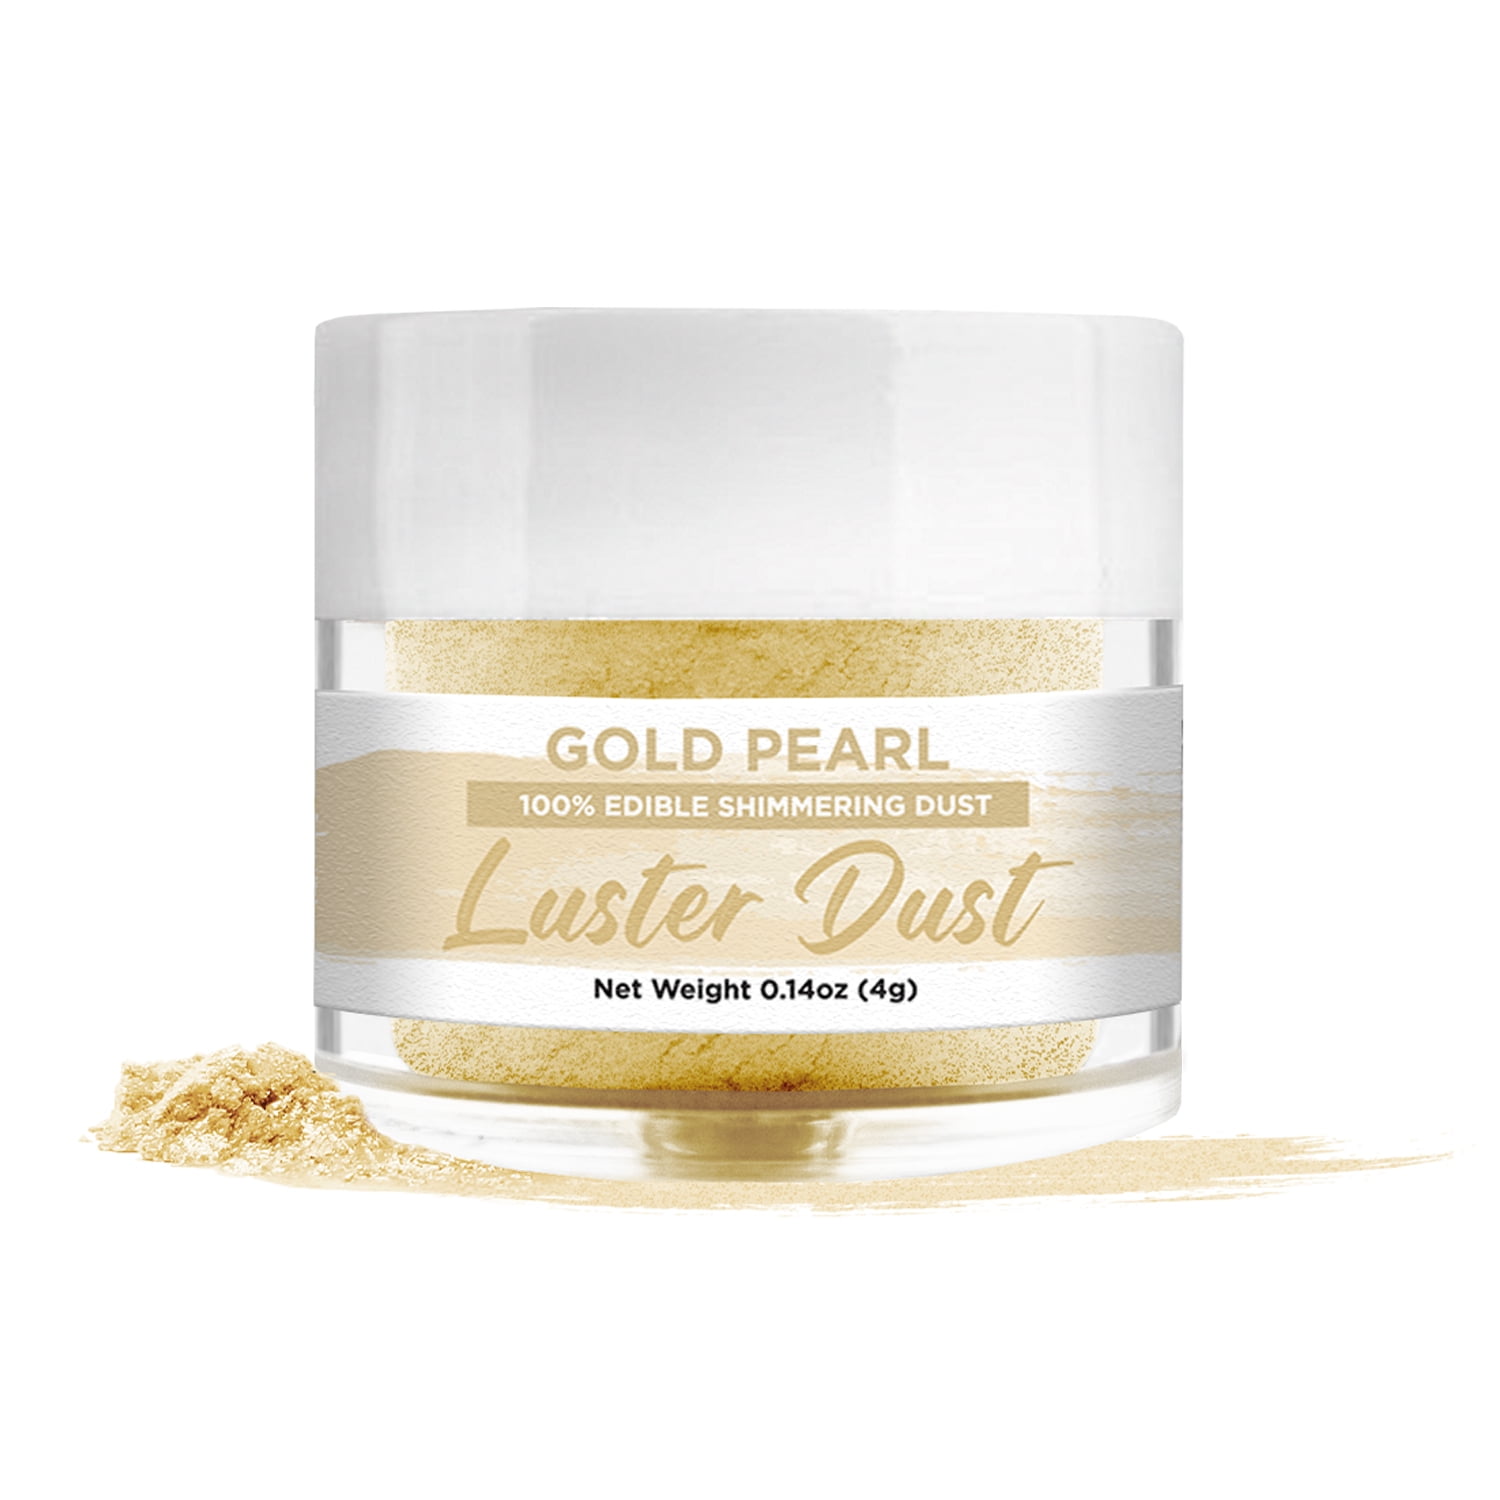 BAKELL Edible Gold Pearl Luster Dust & Paint, 4 Gram Jar